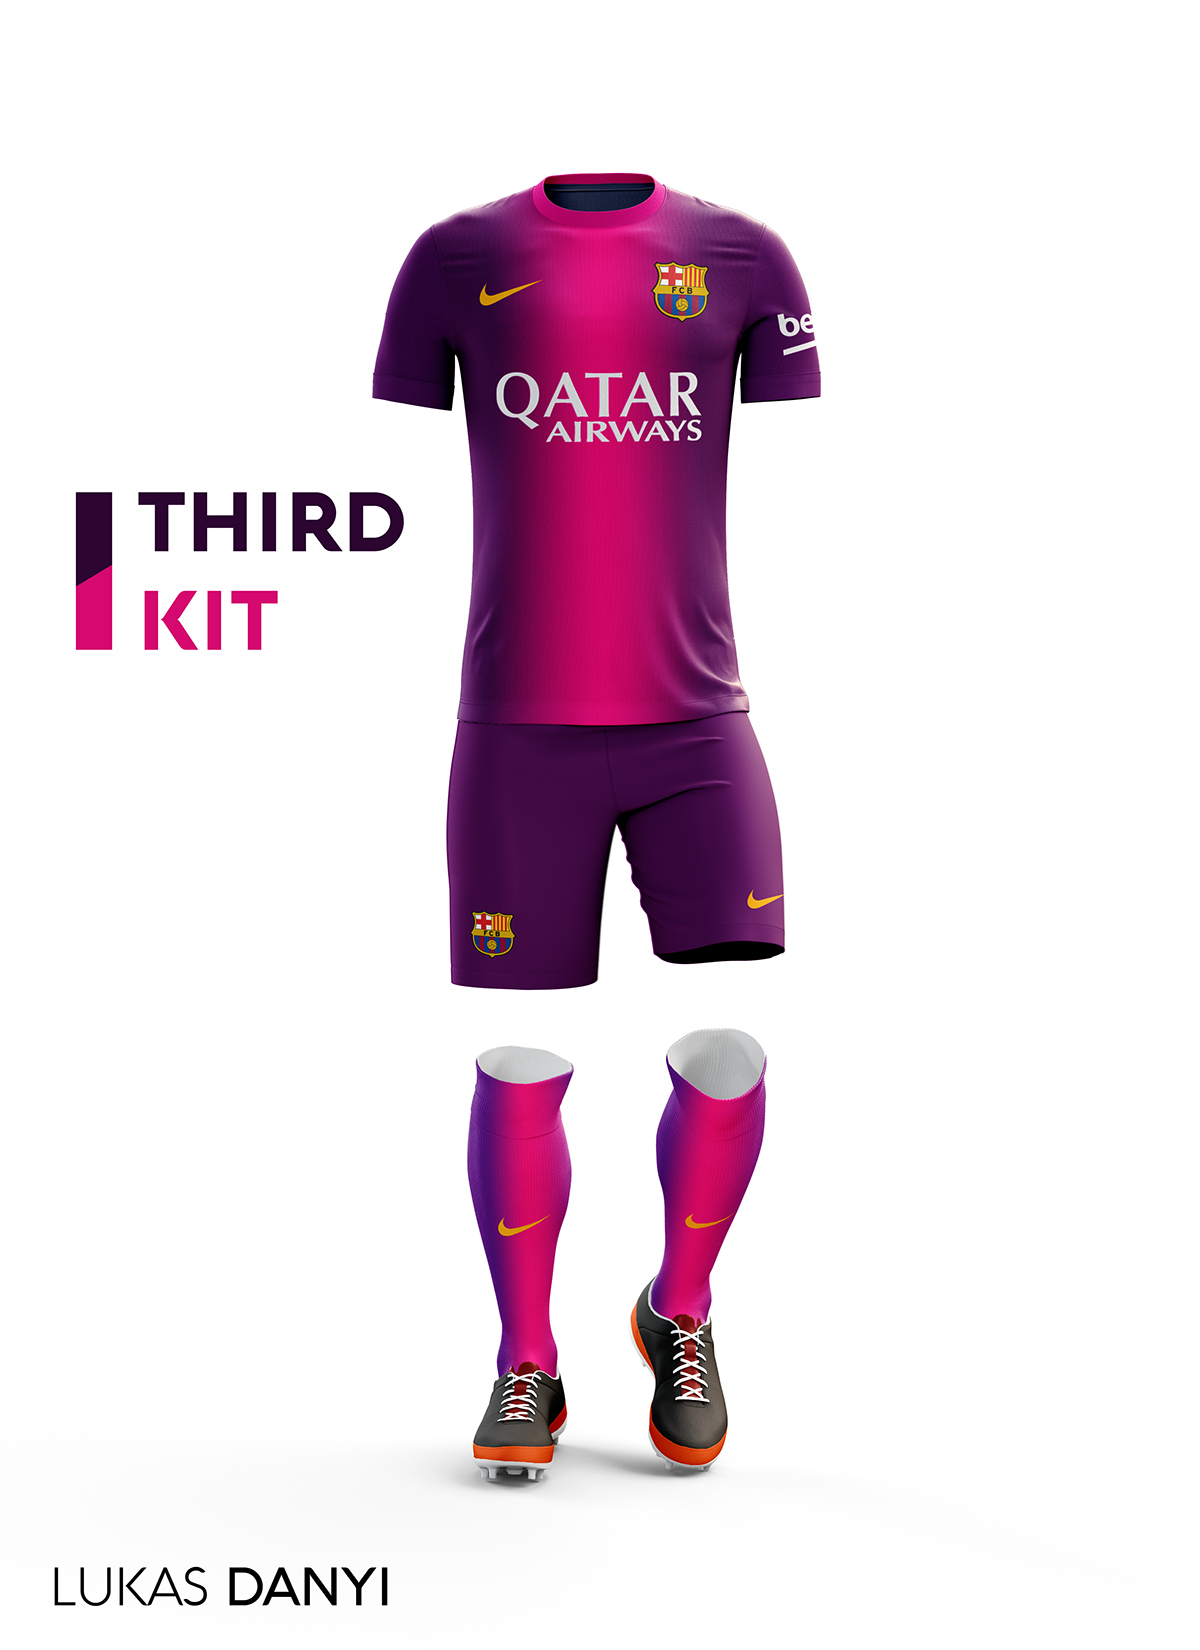 Fc Barcelona Football Kit 16/17. on Behance